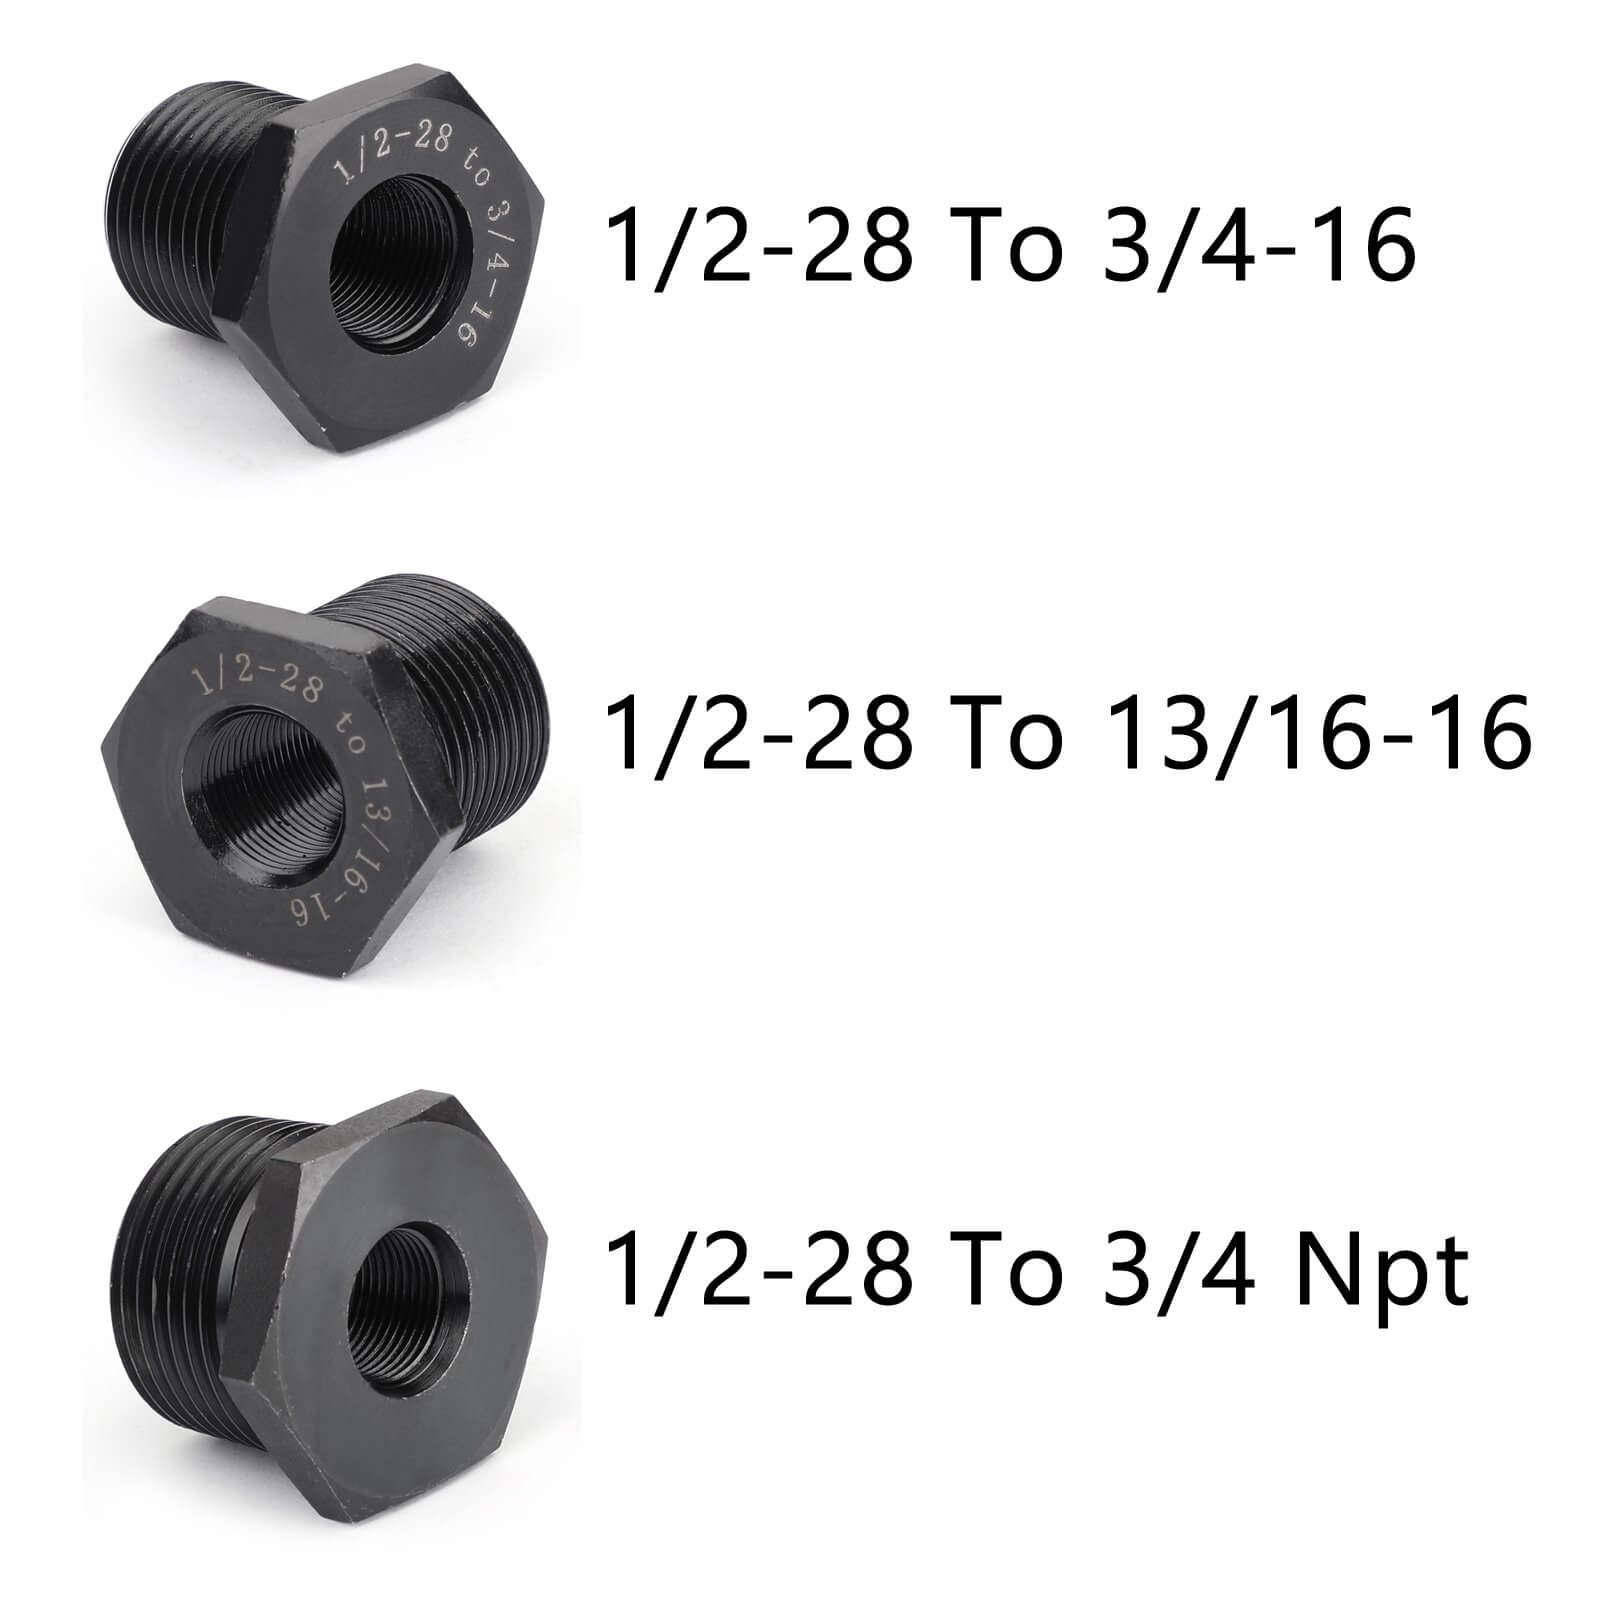 3PCS 1/2-28 to 3/4-16, 13/16-16, 3/4 NPT Thread Oil Filter Adapters Black New Generic